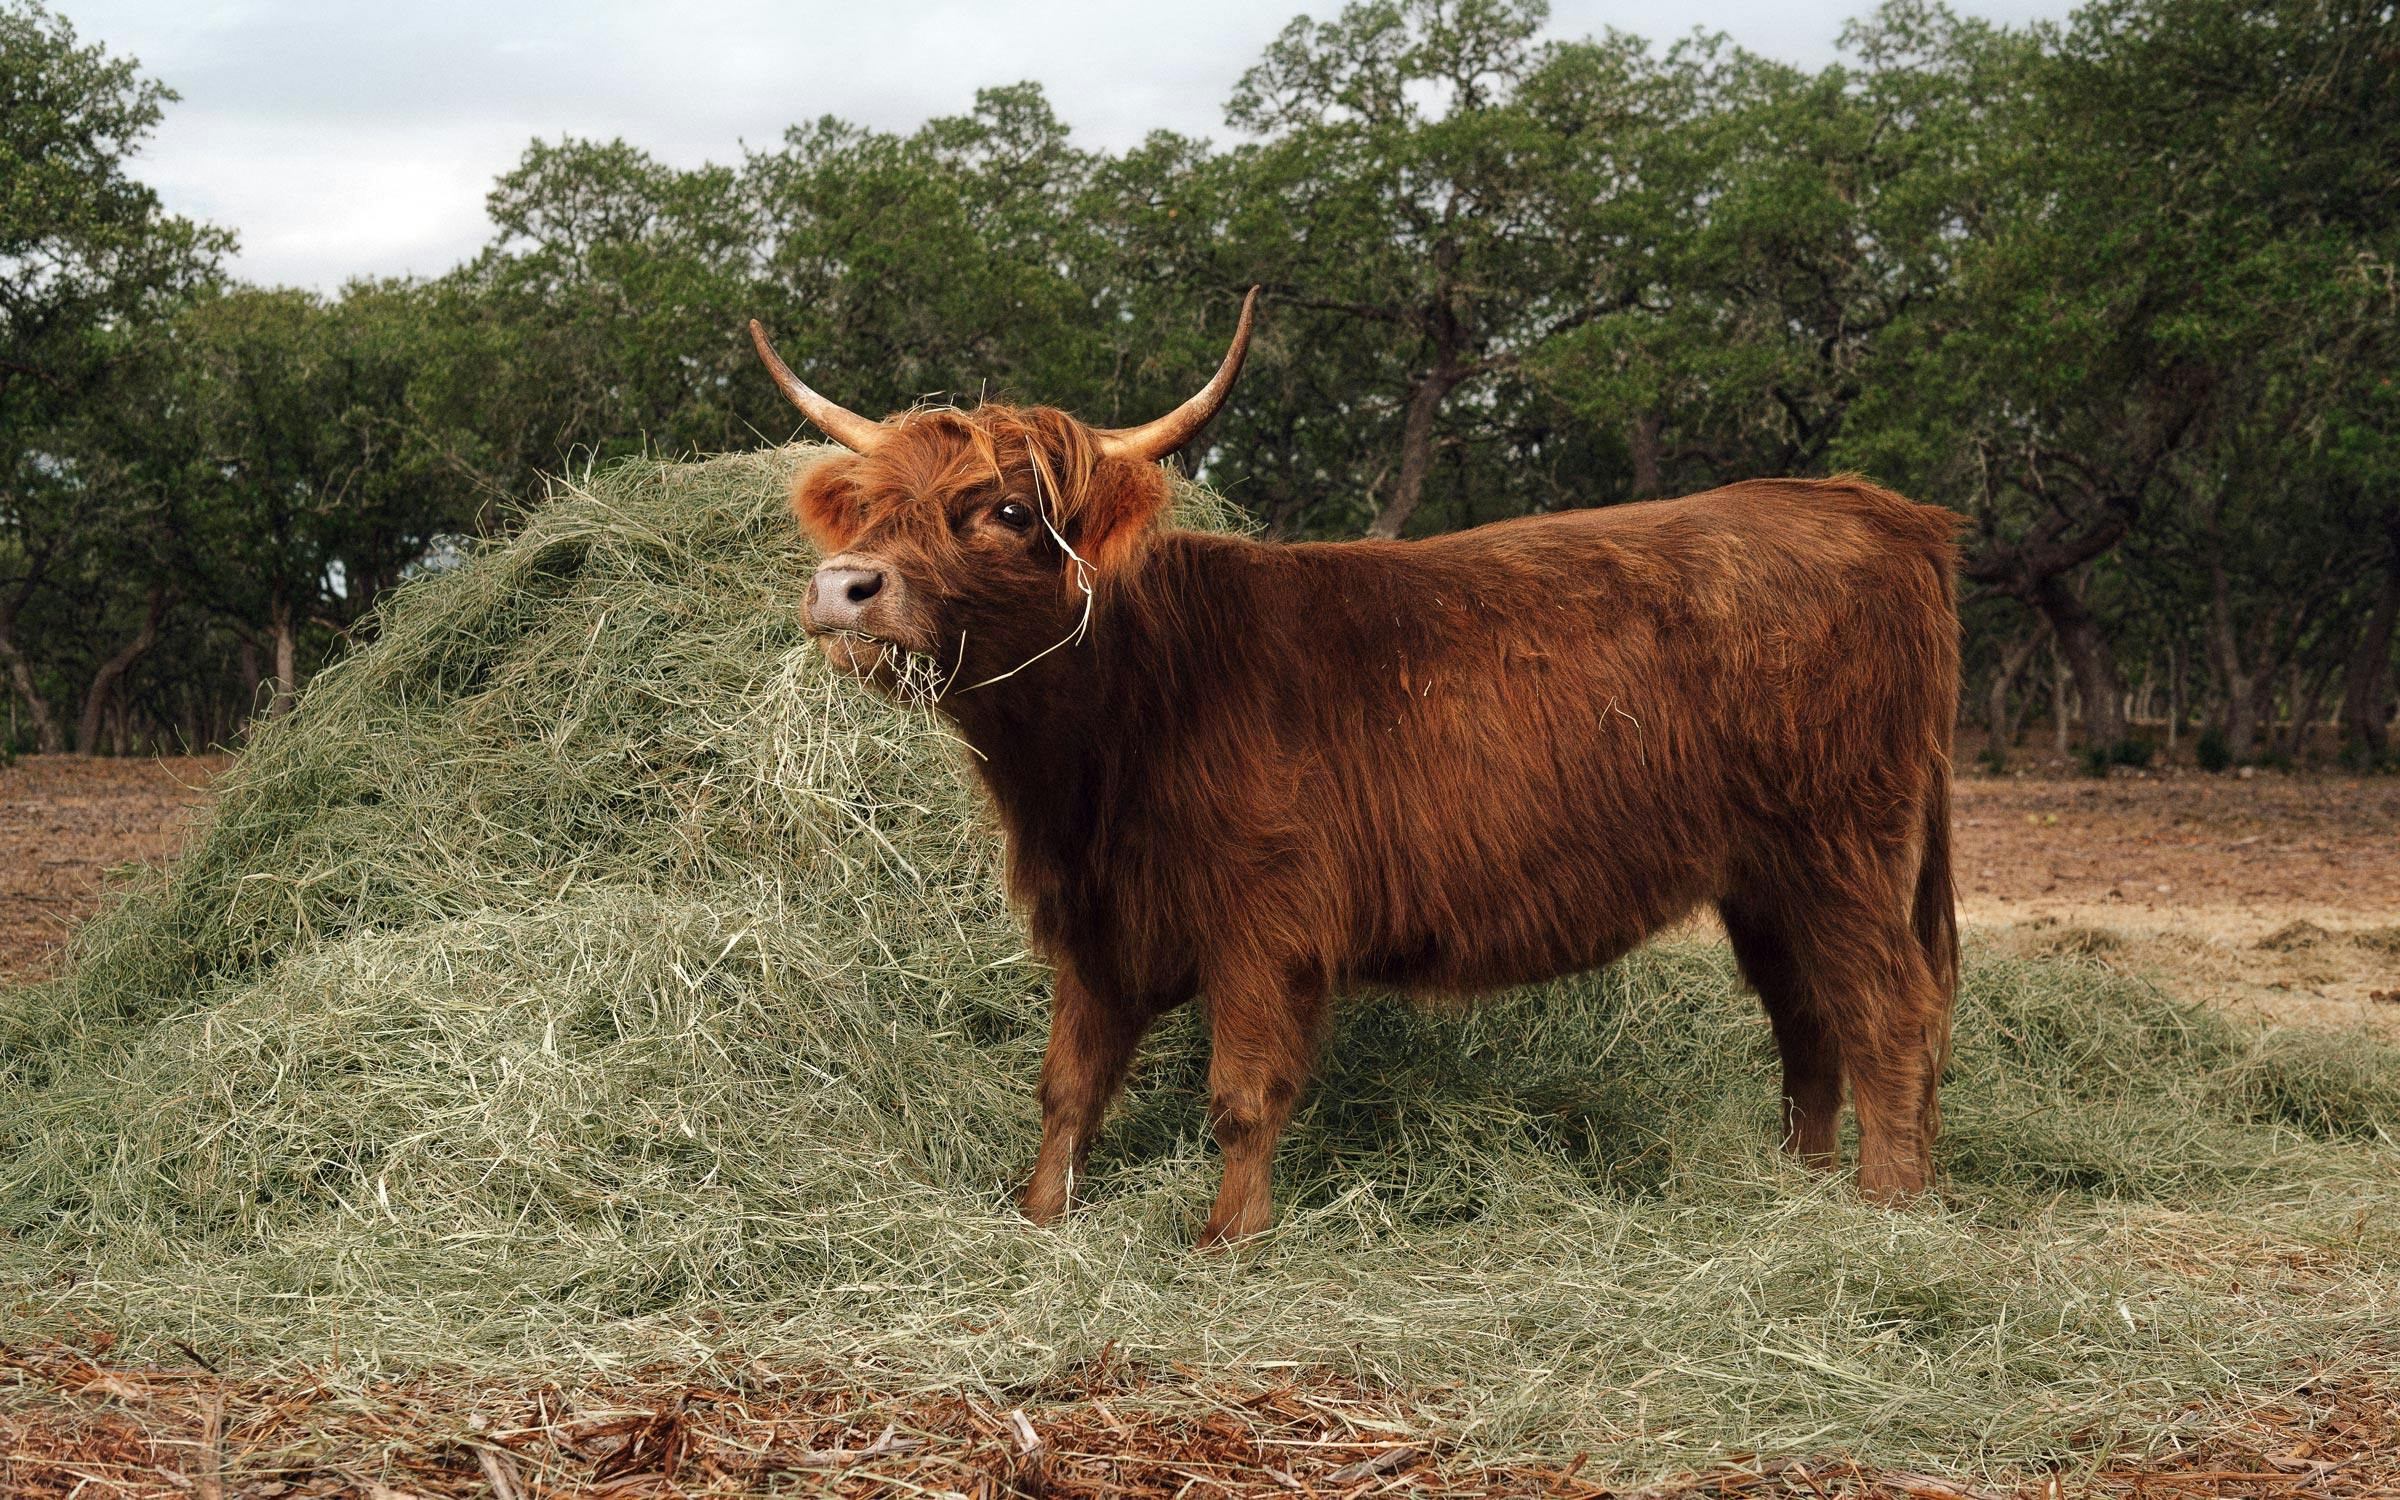 Mini cows, big plans - Country Folks